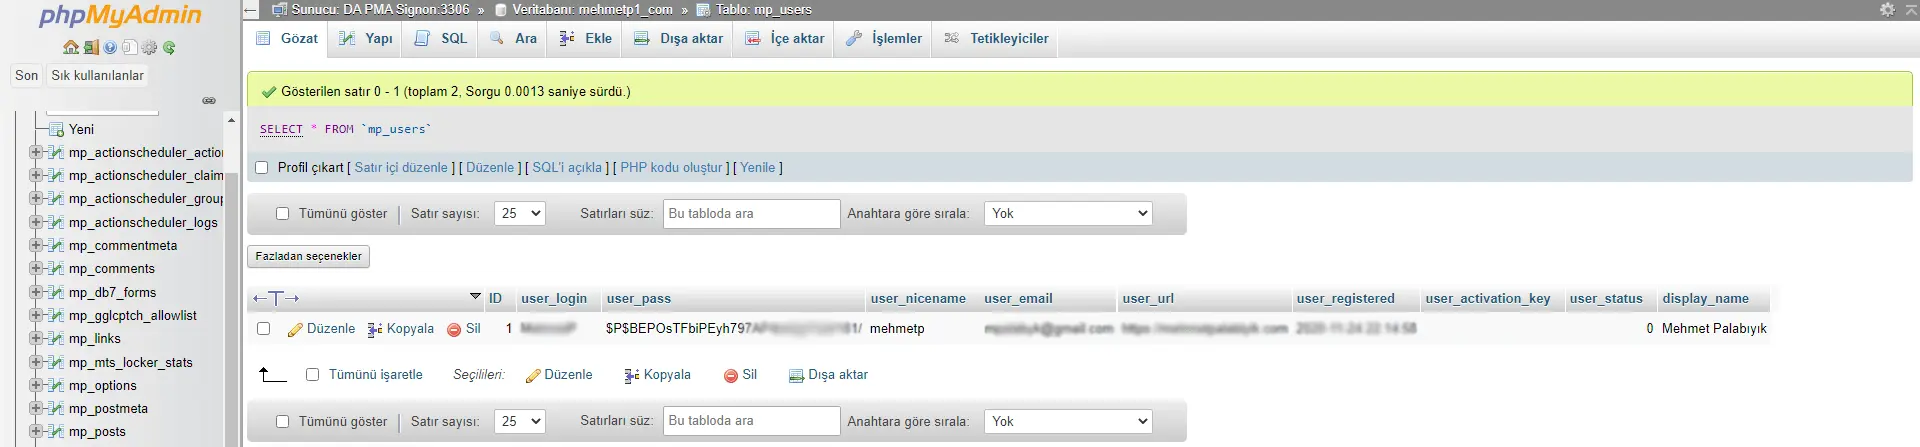 Wordperss PHP My Admin Şifre Nasil Sifirlanir?